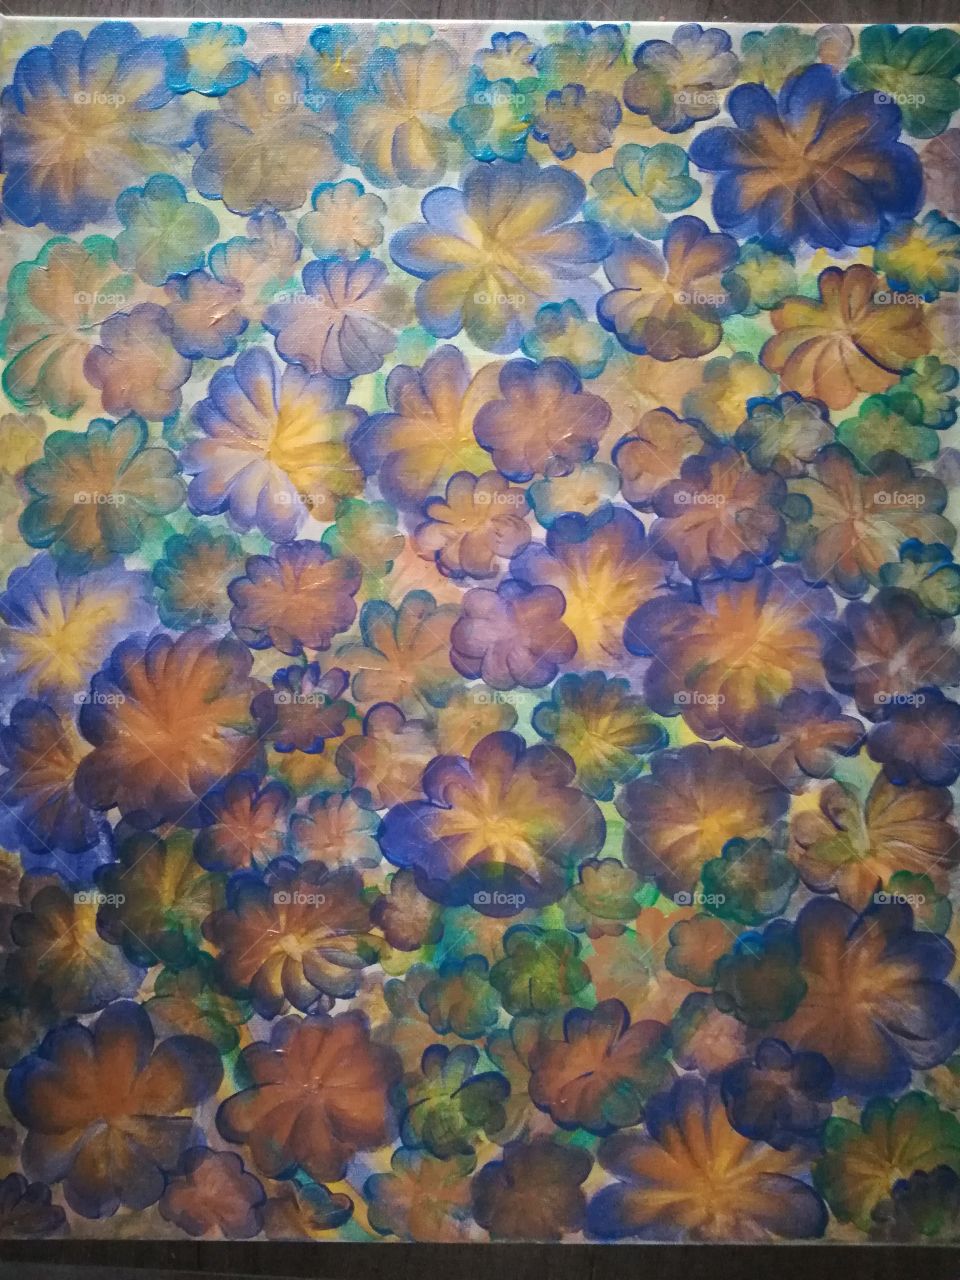 Neon flowers painting